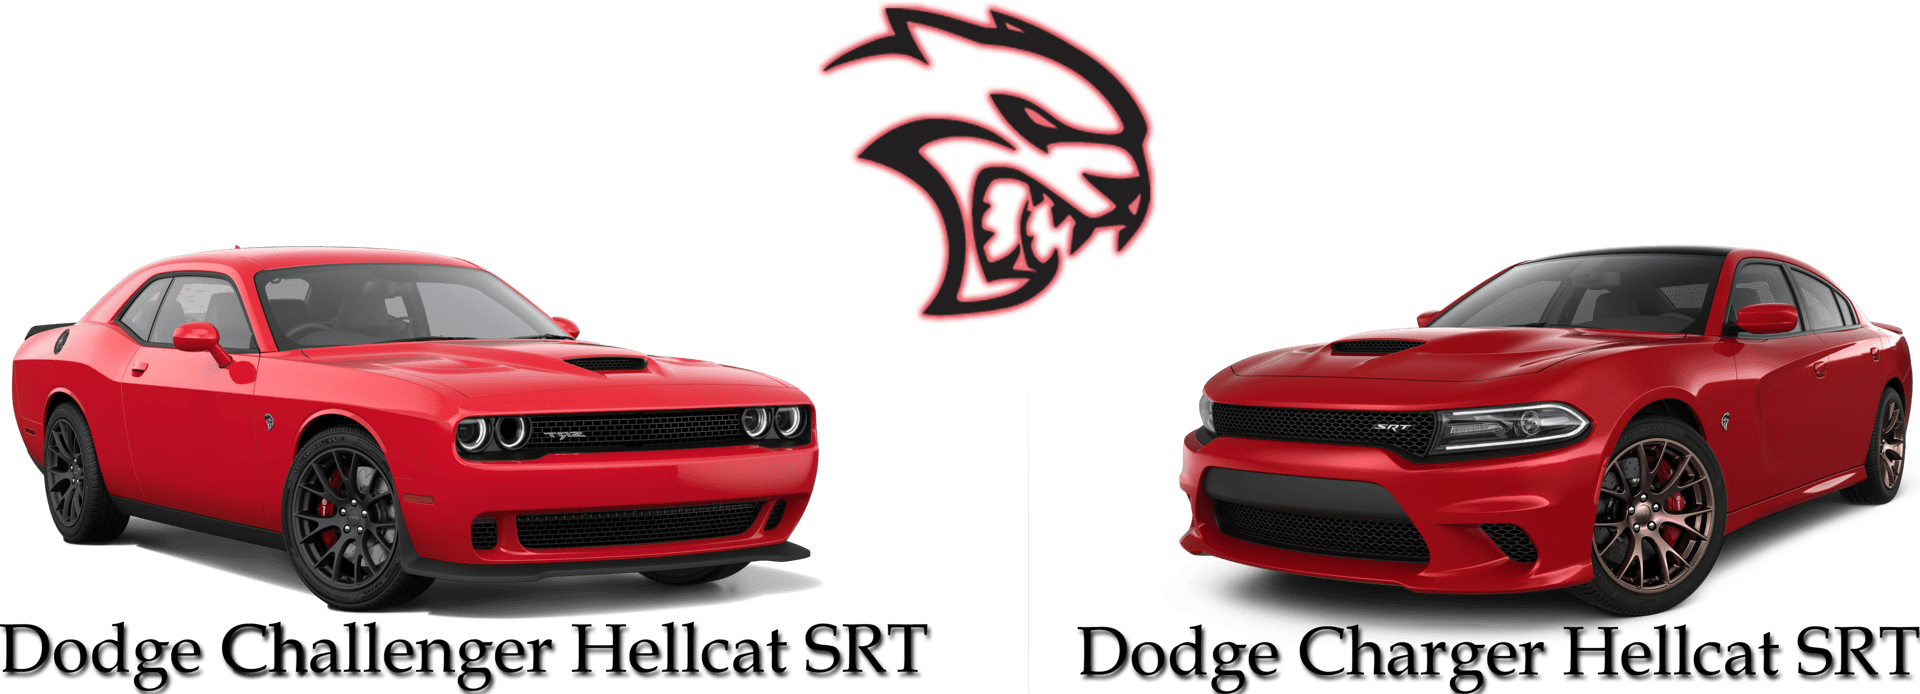 Hellcat SRT Cars